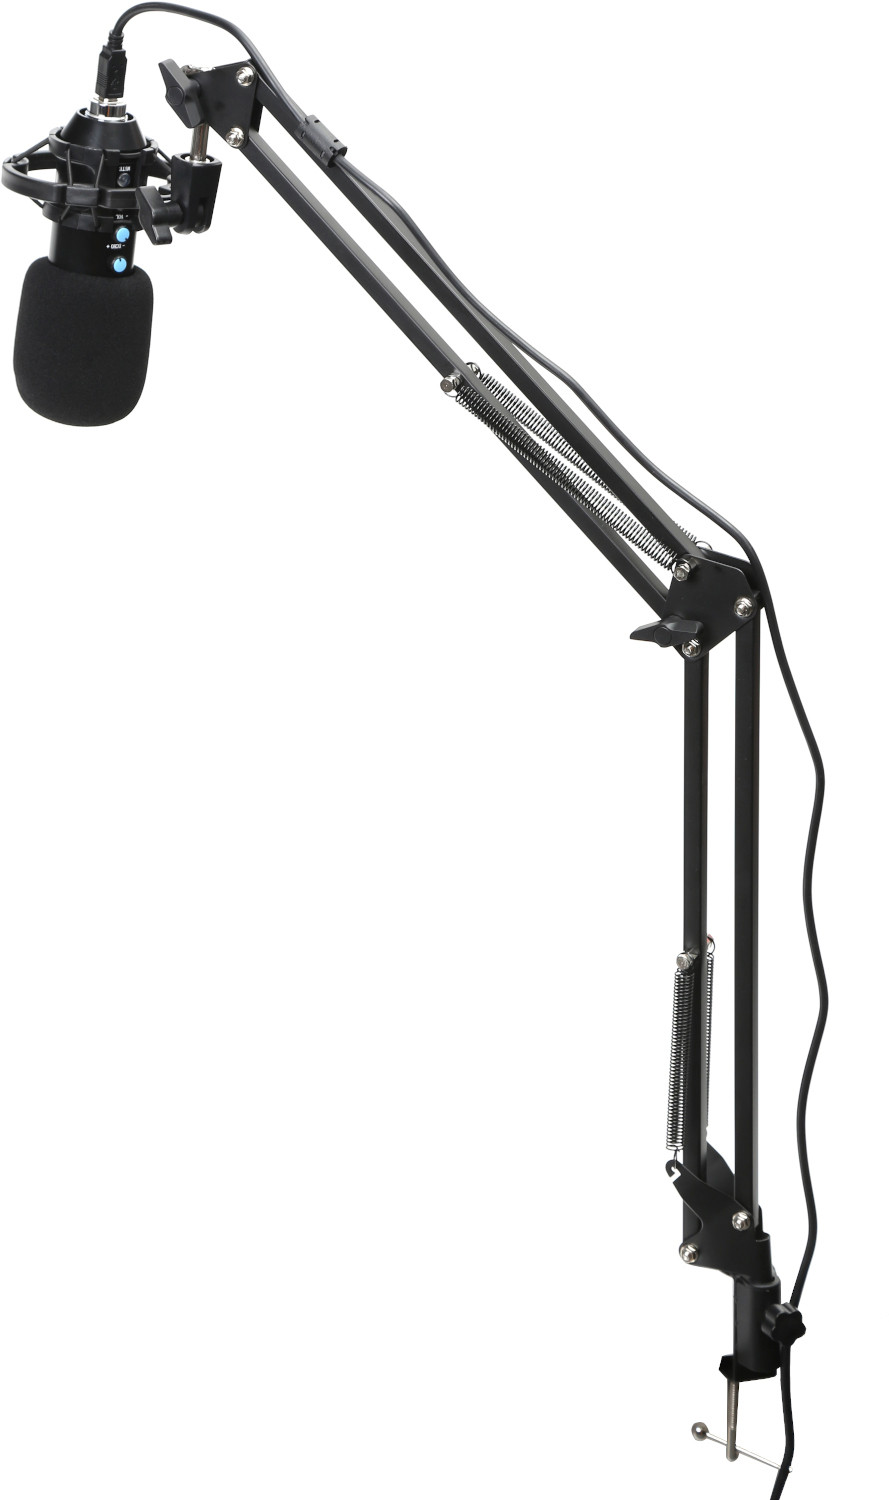 Omega microphone Varr Gaming Tube, black (45468) 5907595454681 45468 (5907595454681)